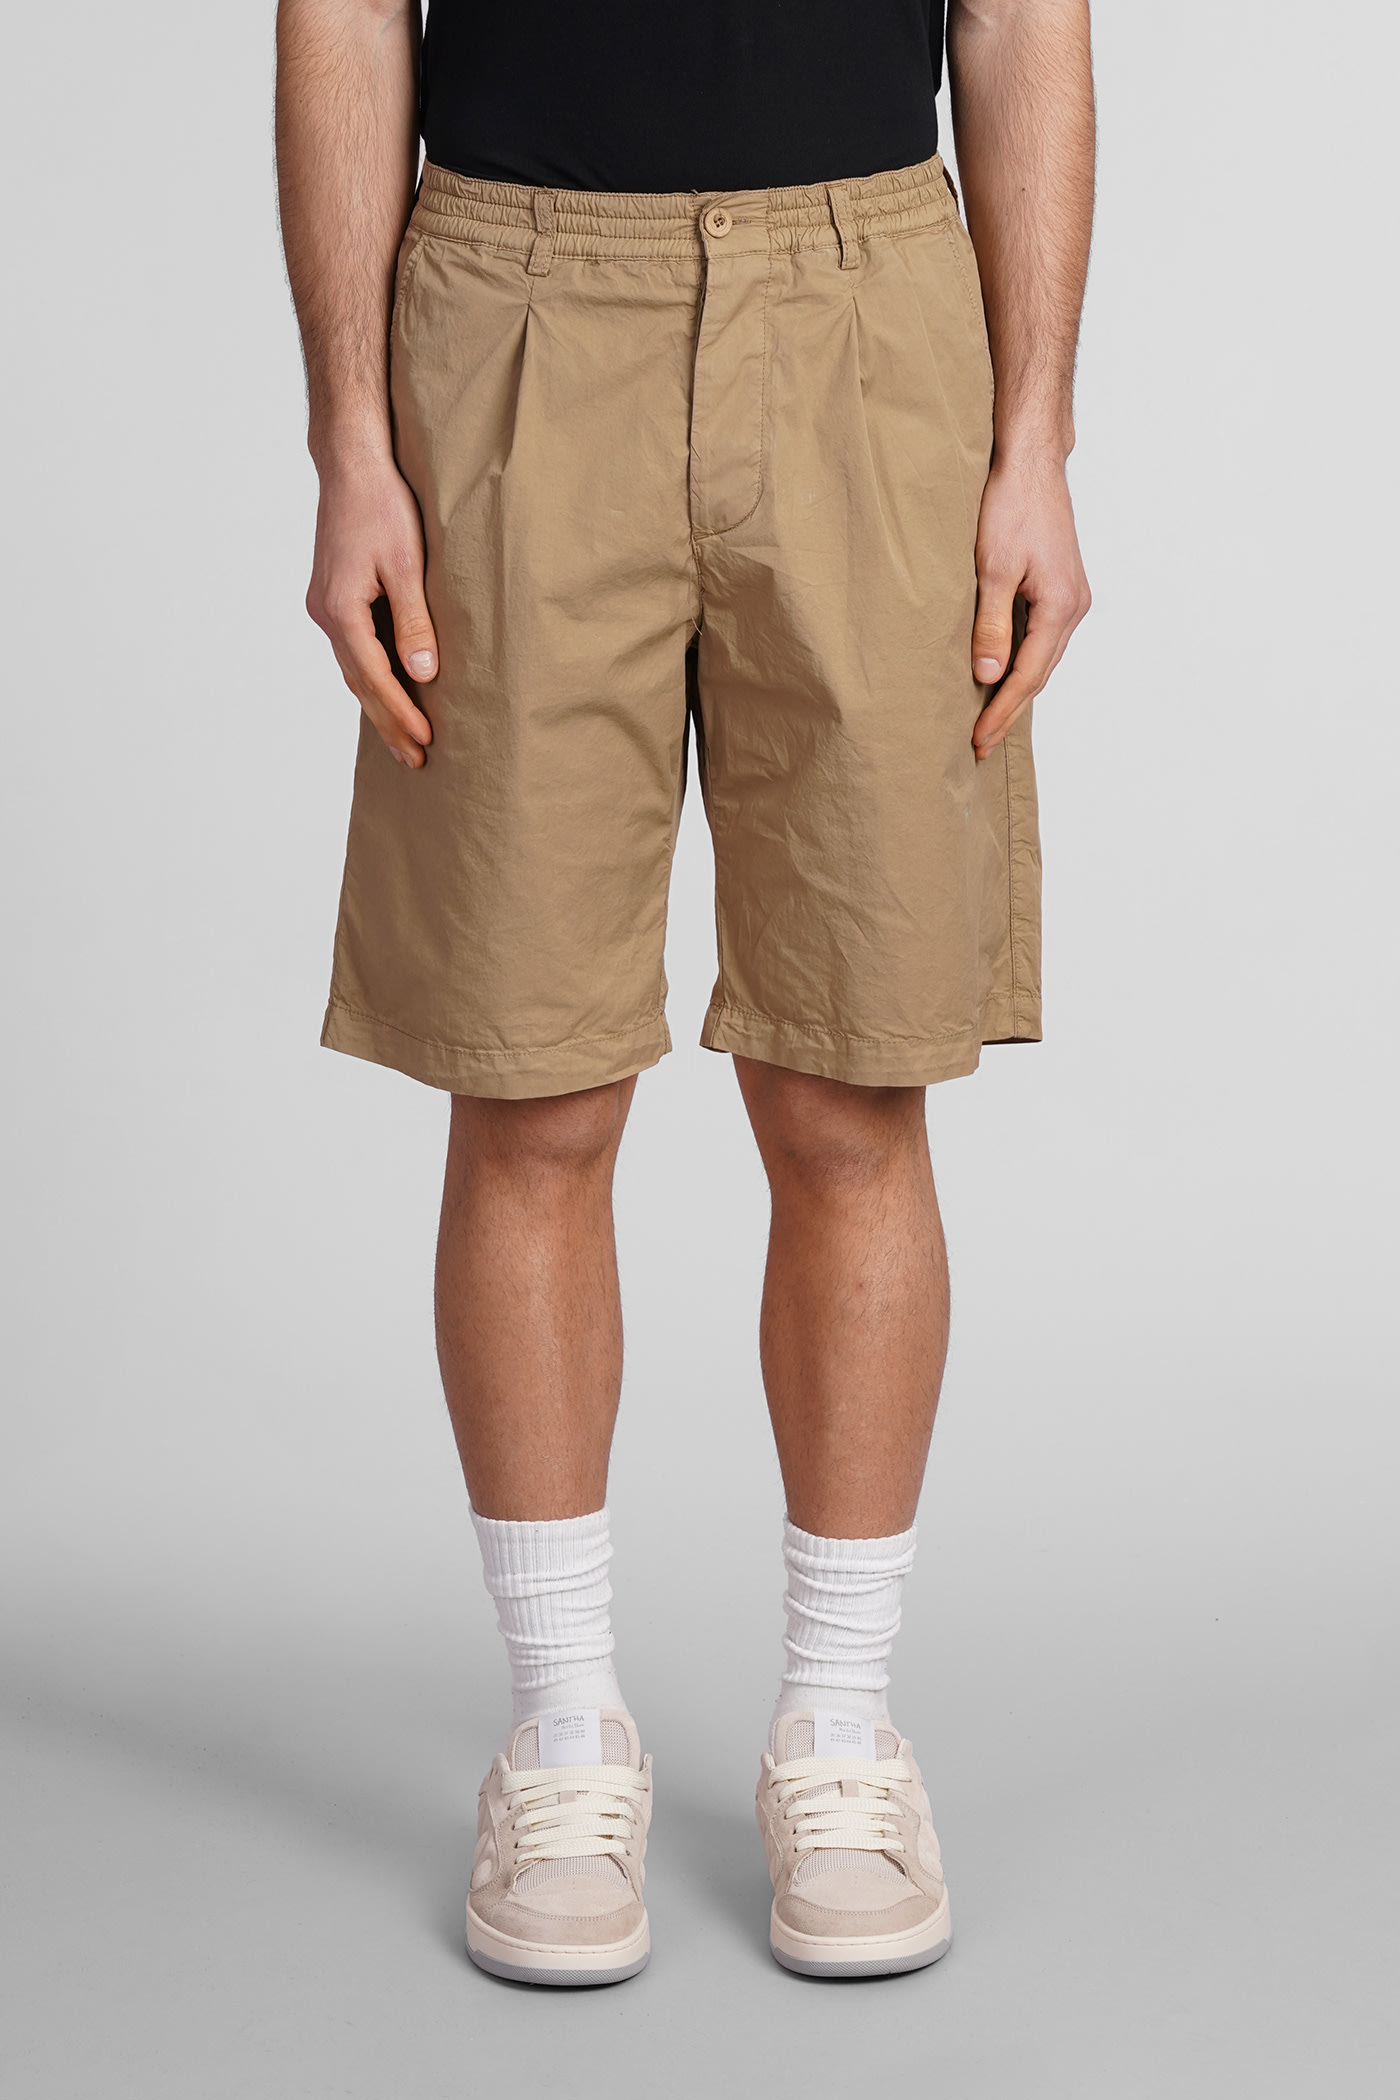 Harrison Shorts In Beige Cotton